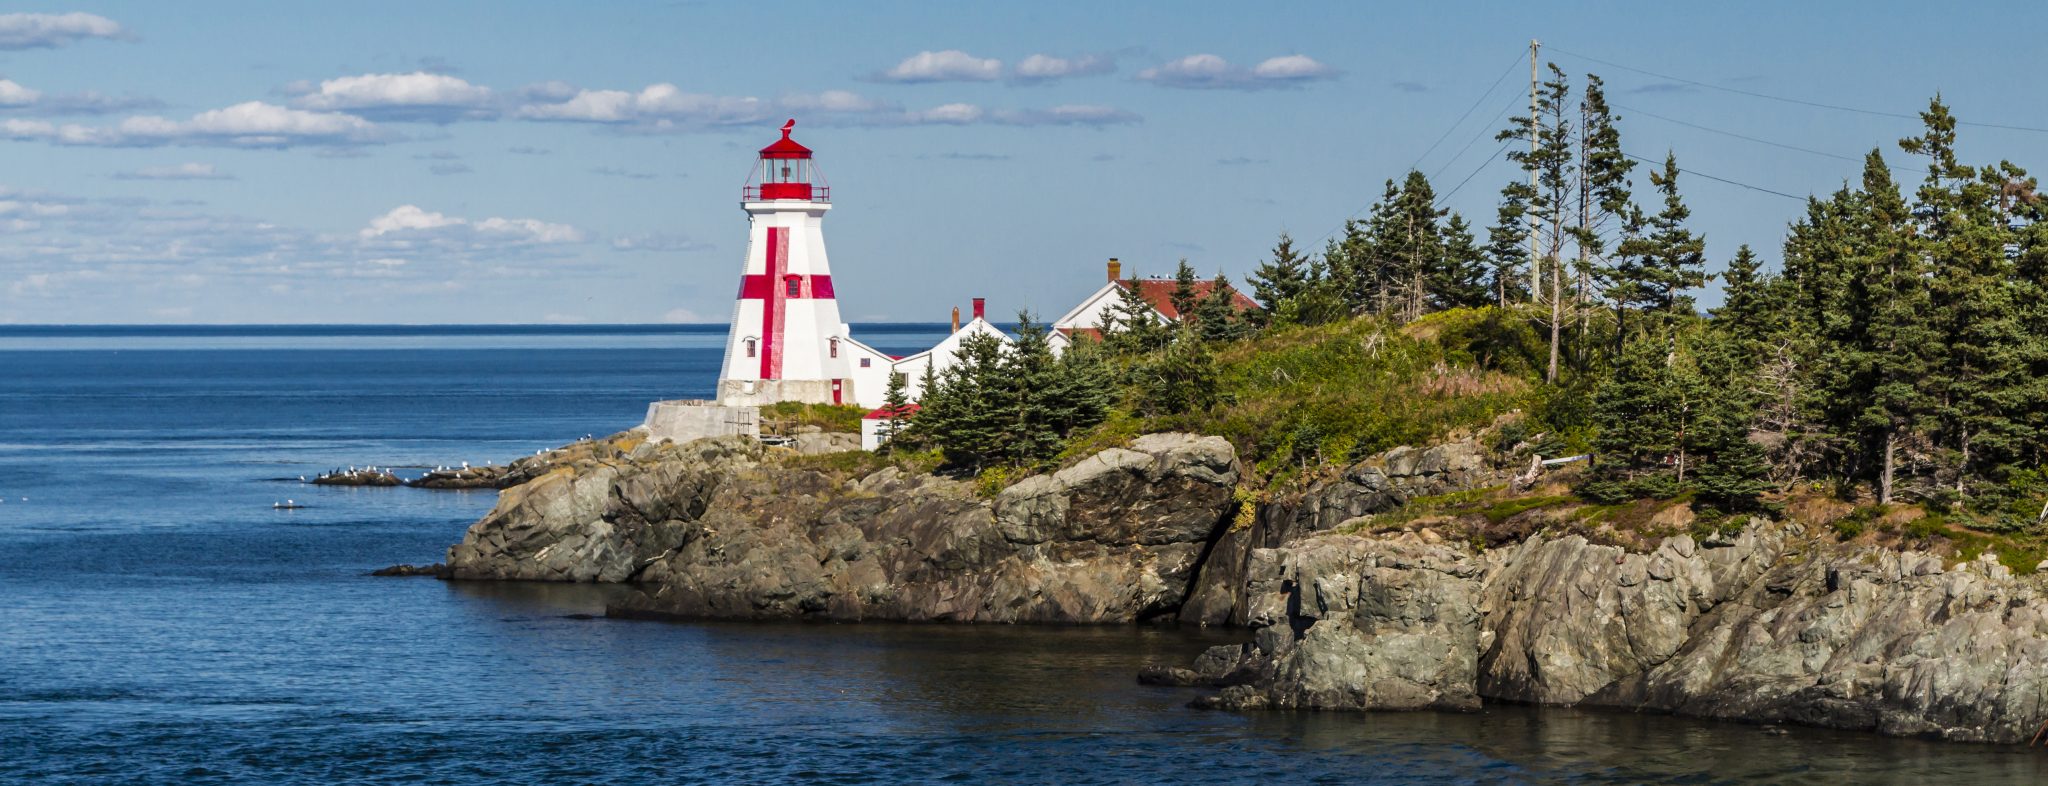 Nova Scotia New Brunswick Canada Canada S Maritime Provinces Wonders Of Acadia The Phenomenal Bay Of Fundy Classic Escapes